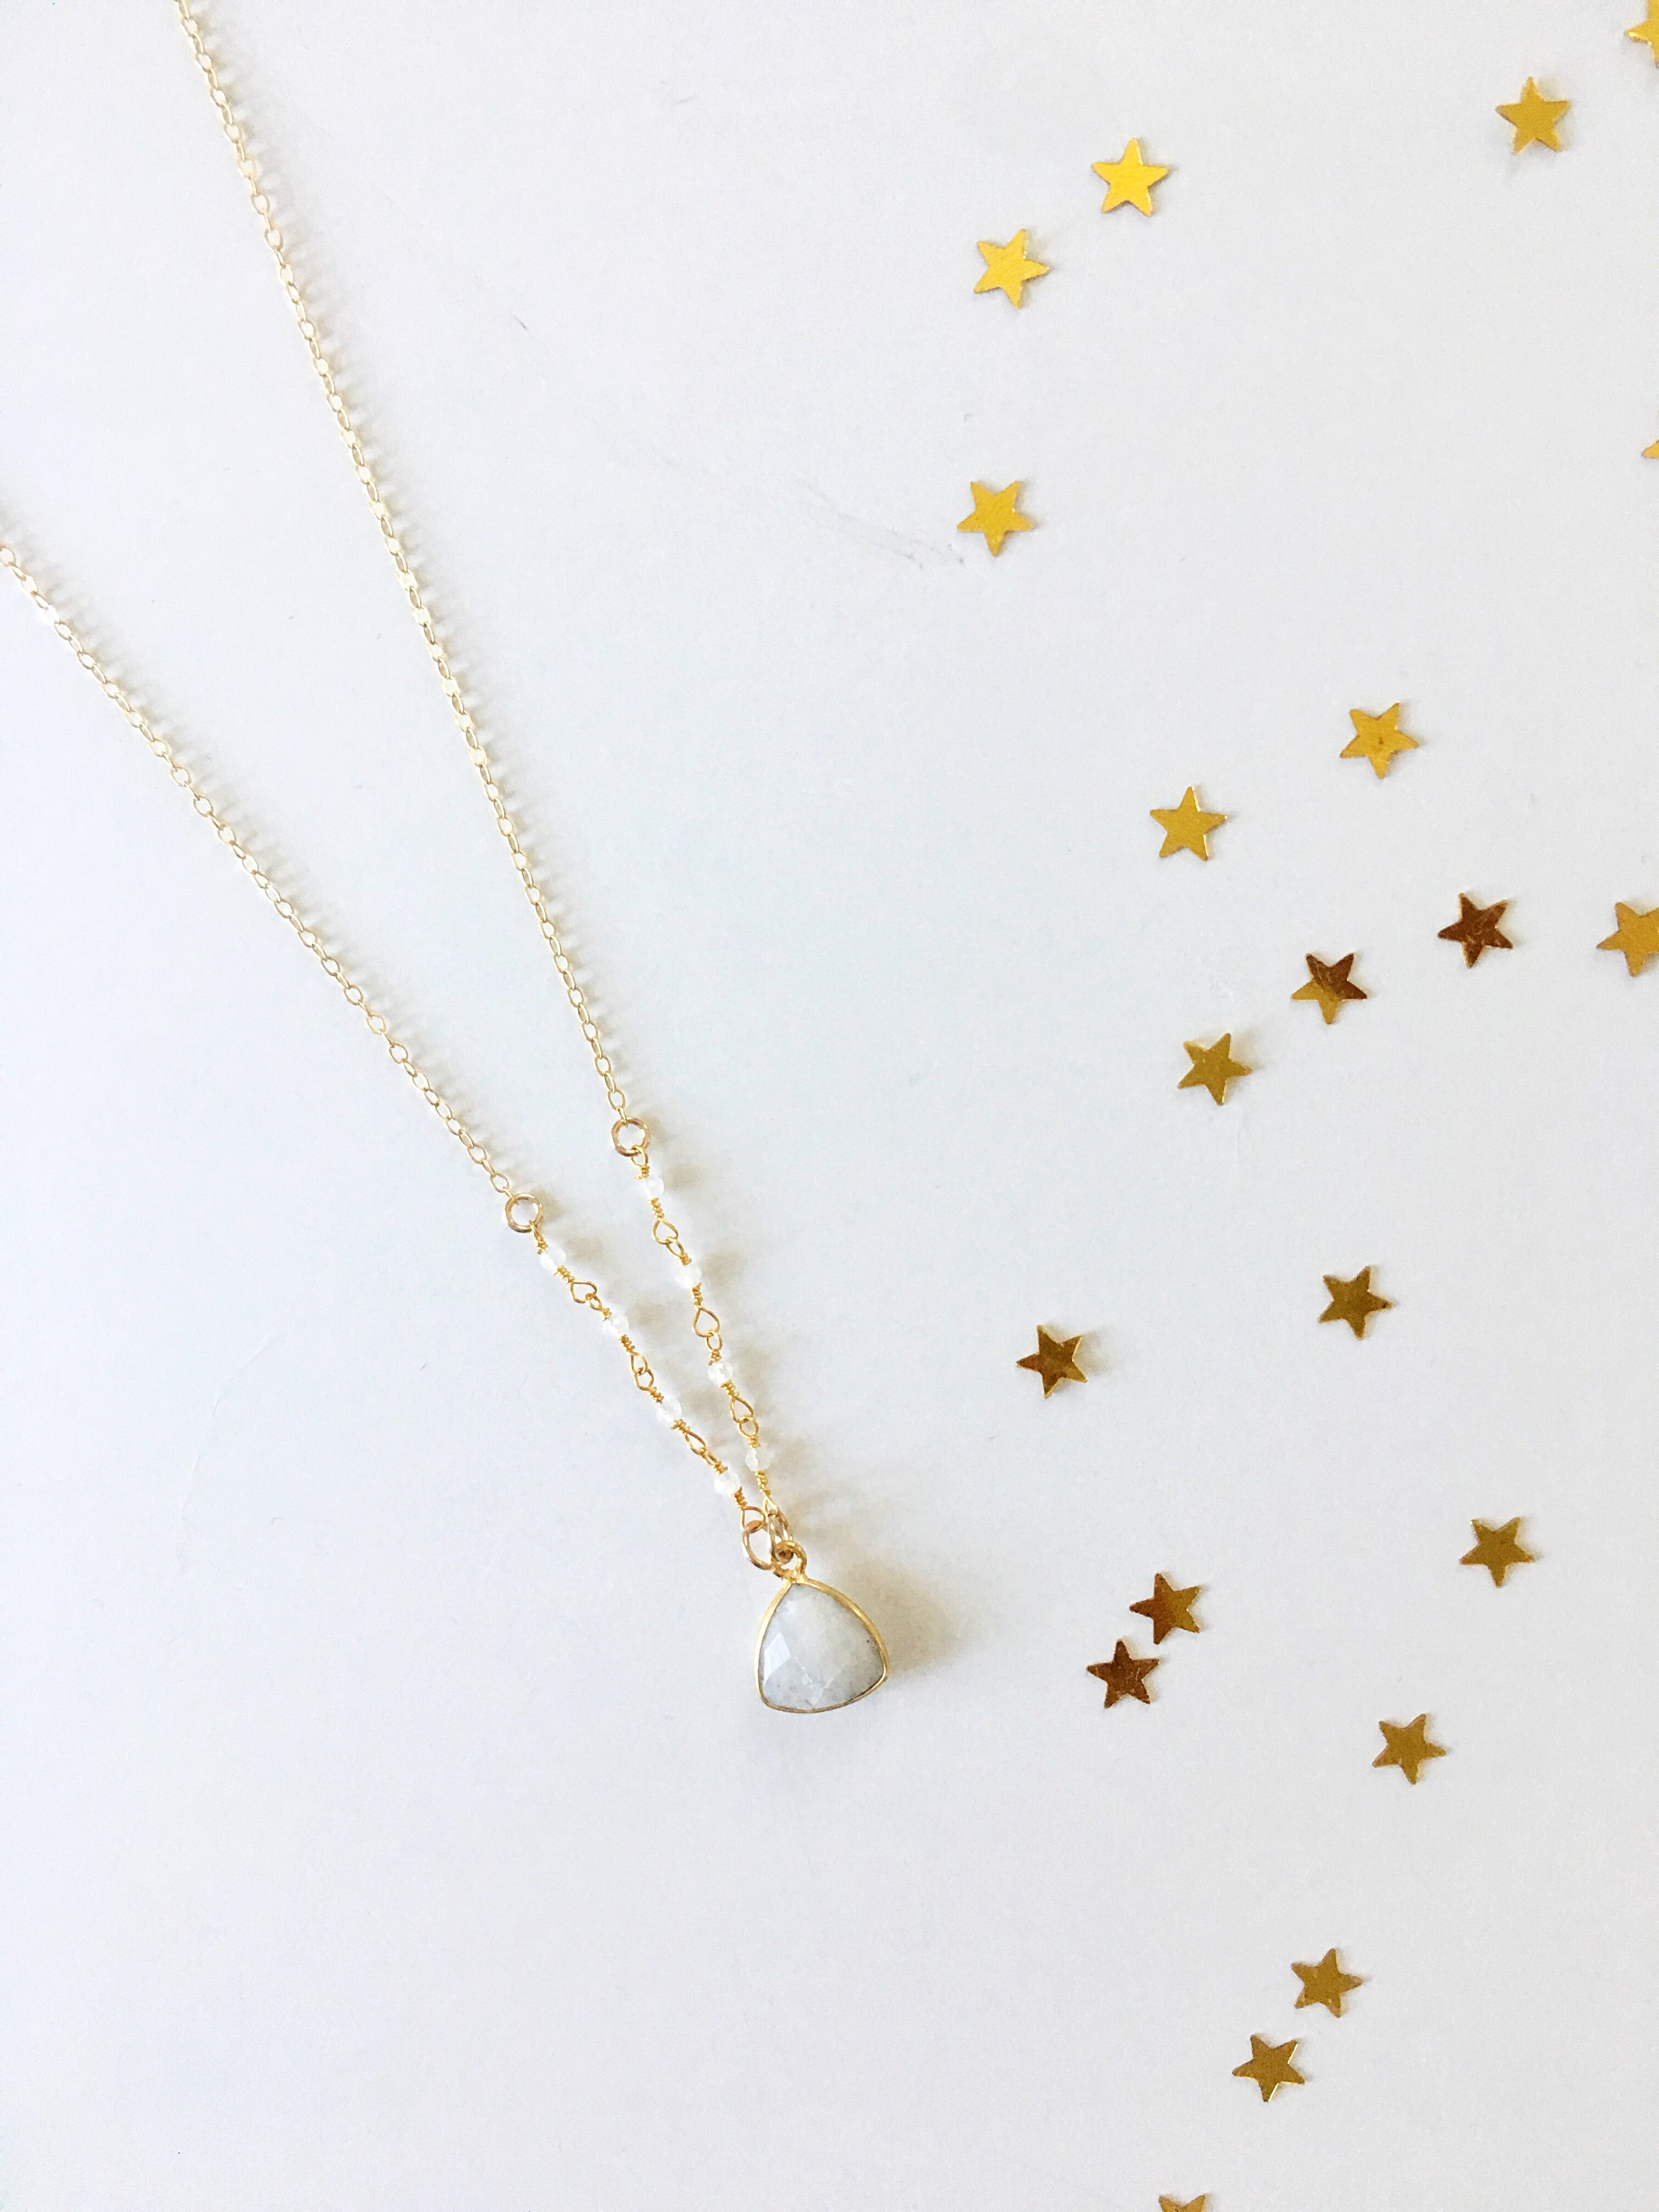 moonstone pendant necklace celestial jewelry